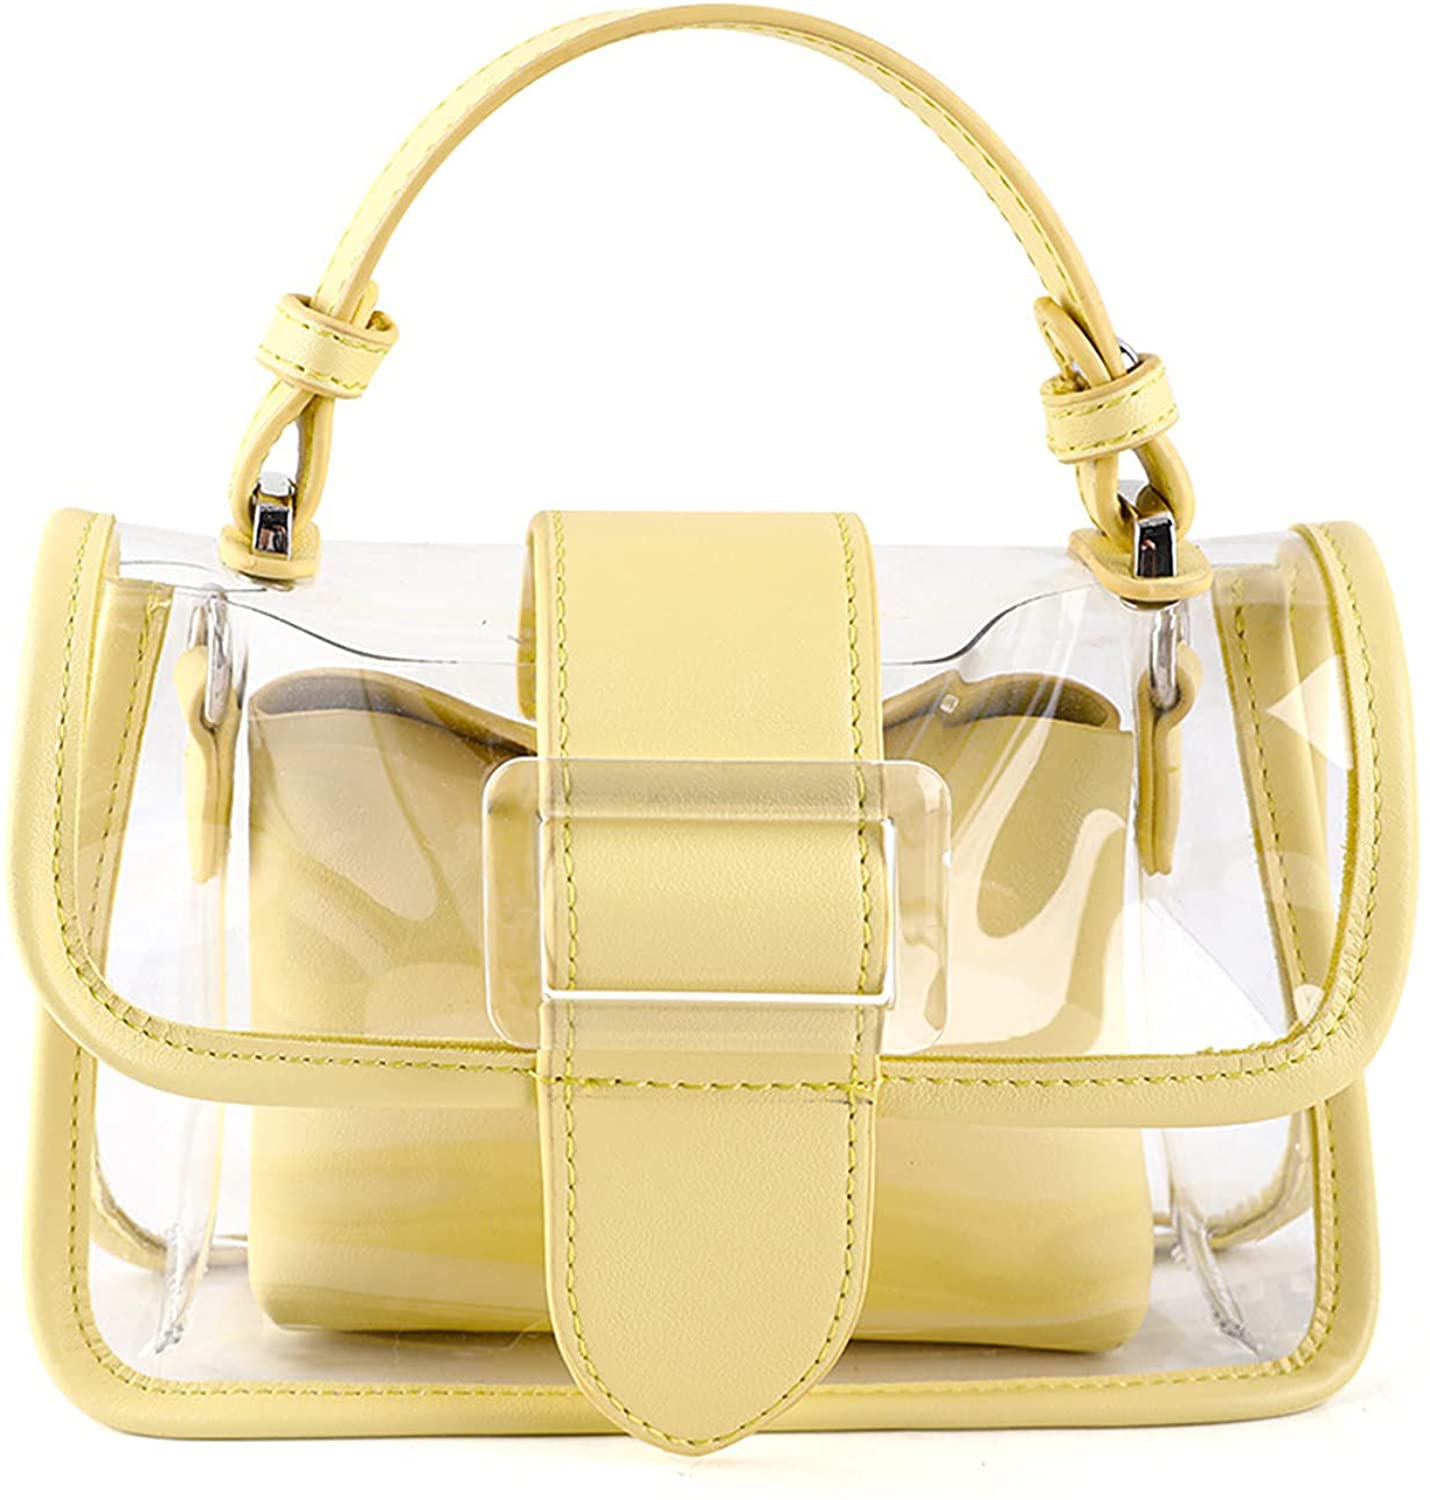 Michael Kors Light Yellow/tan Purse | Yellow purses, Black leather bags,  Black leather handbags